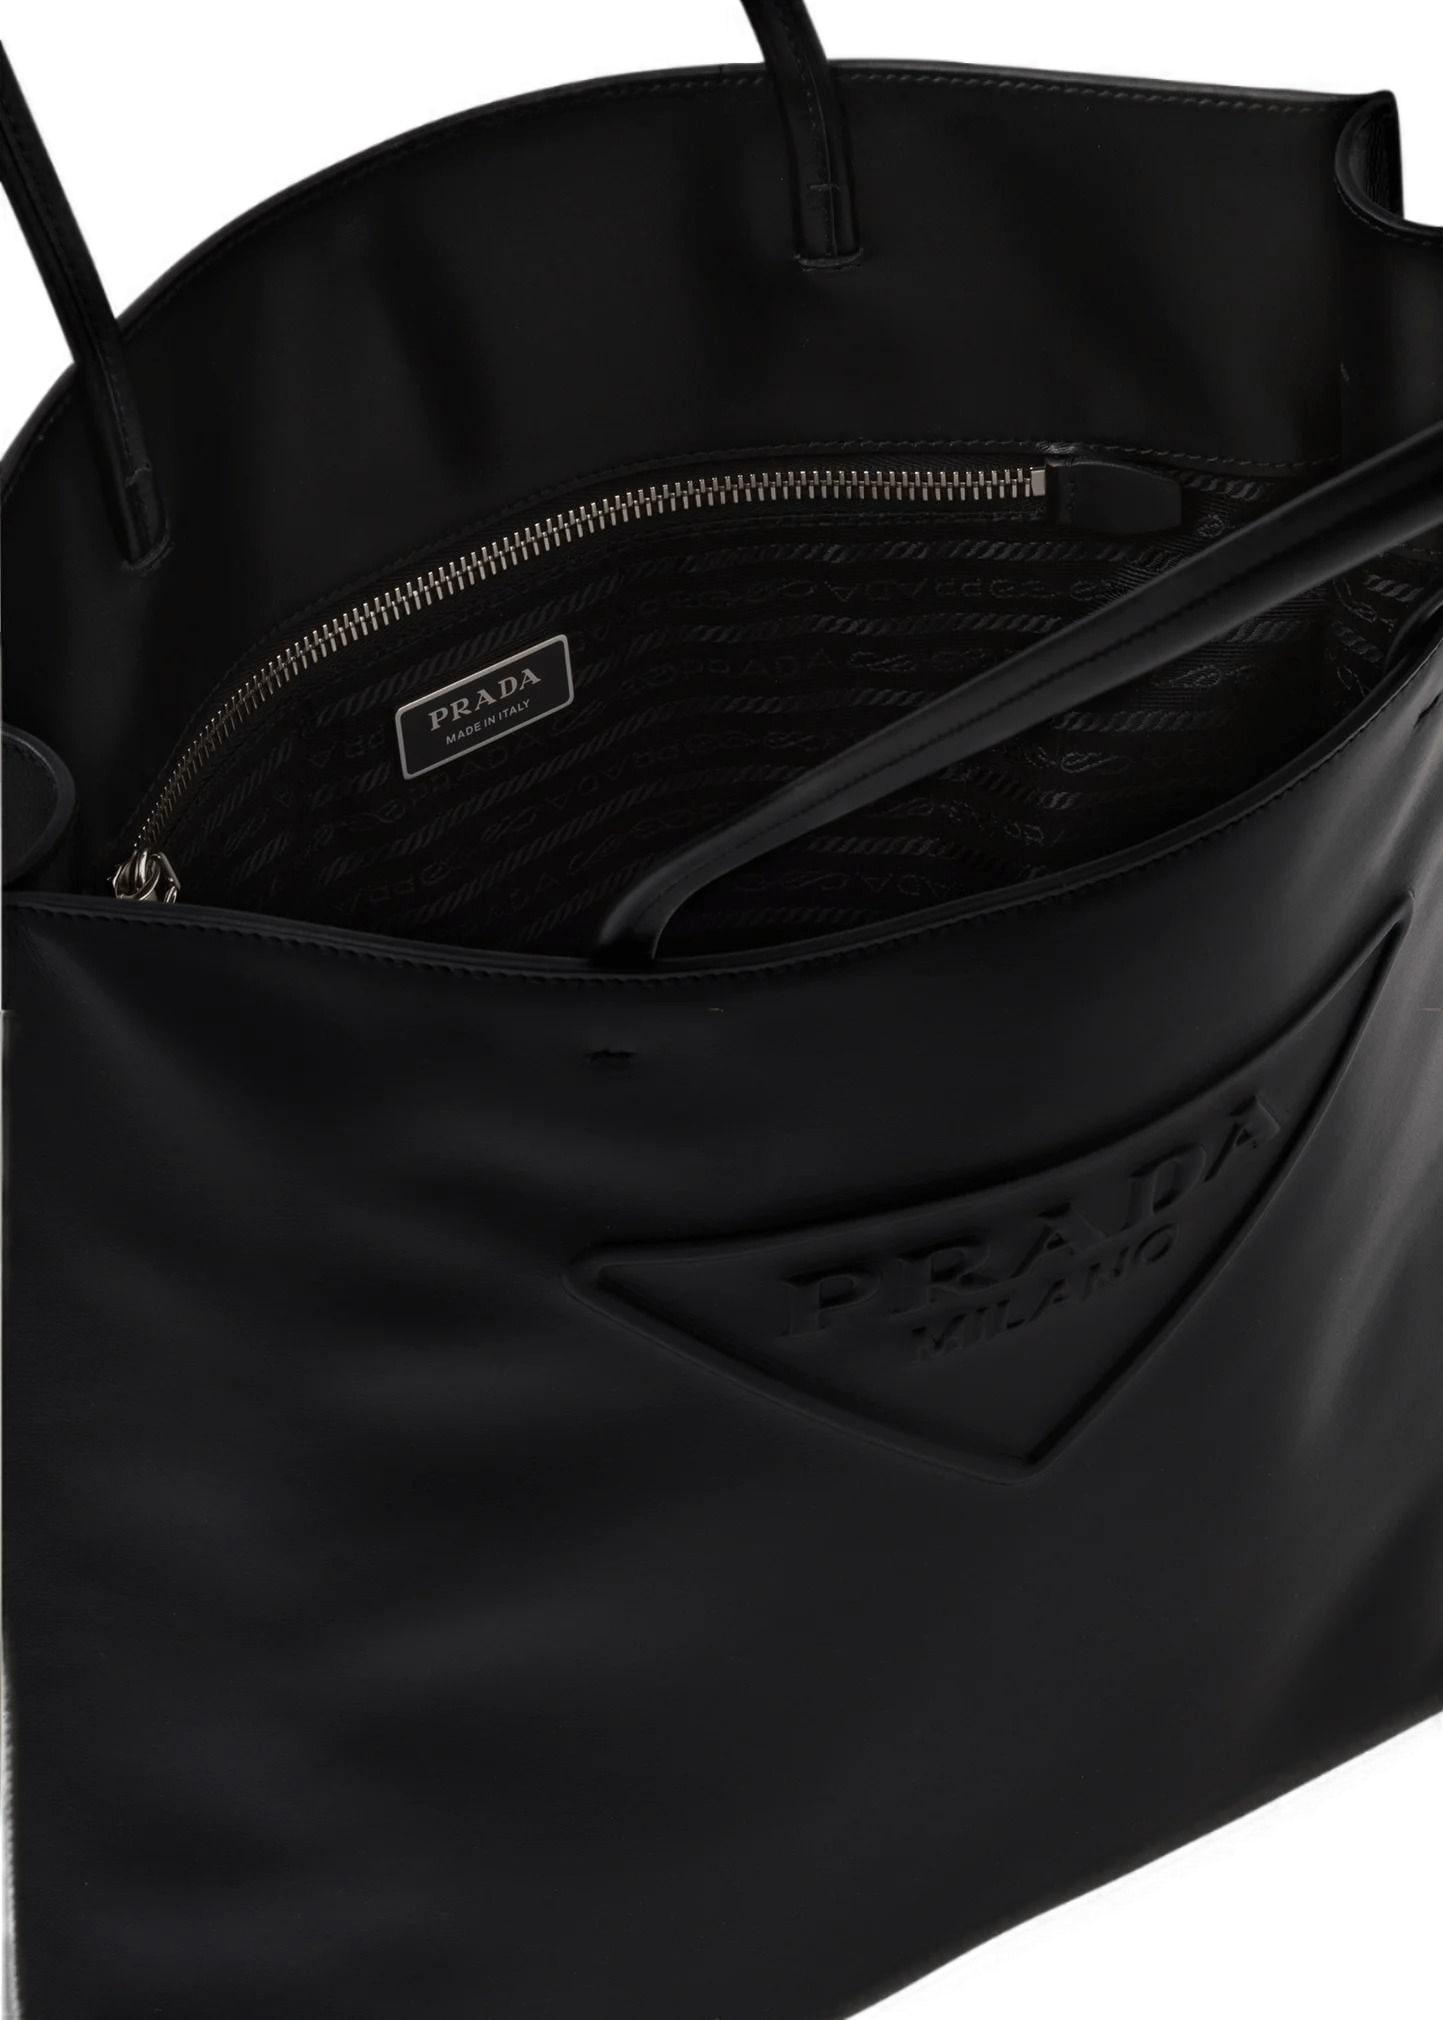 Prada Triangle Logo Shopper Bag in Black | Lyst